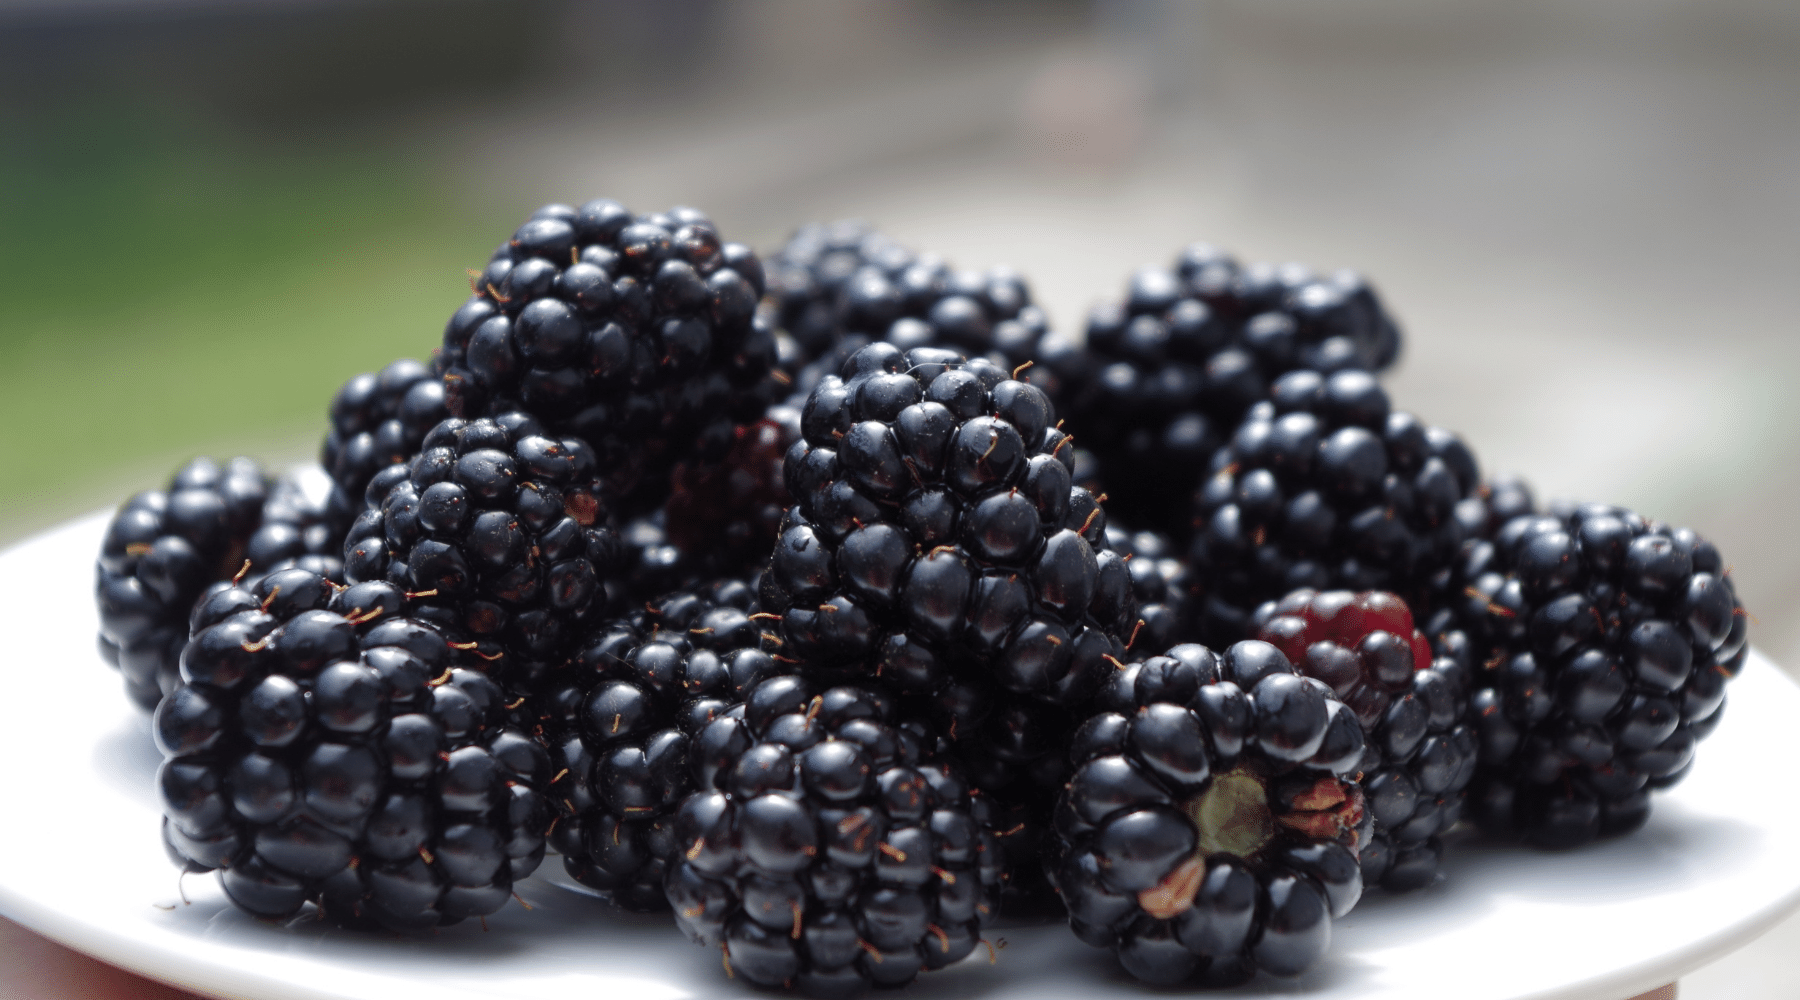 Can dogs eat blackberries?